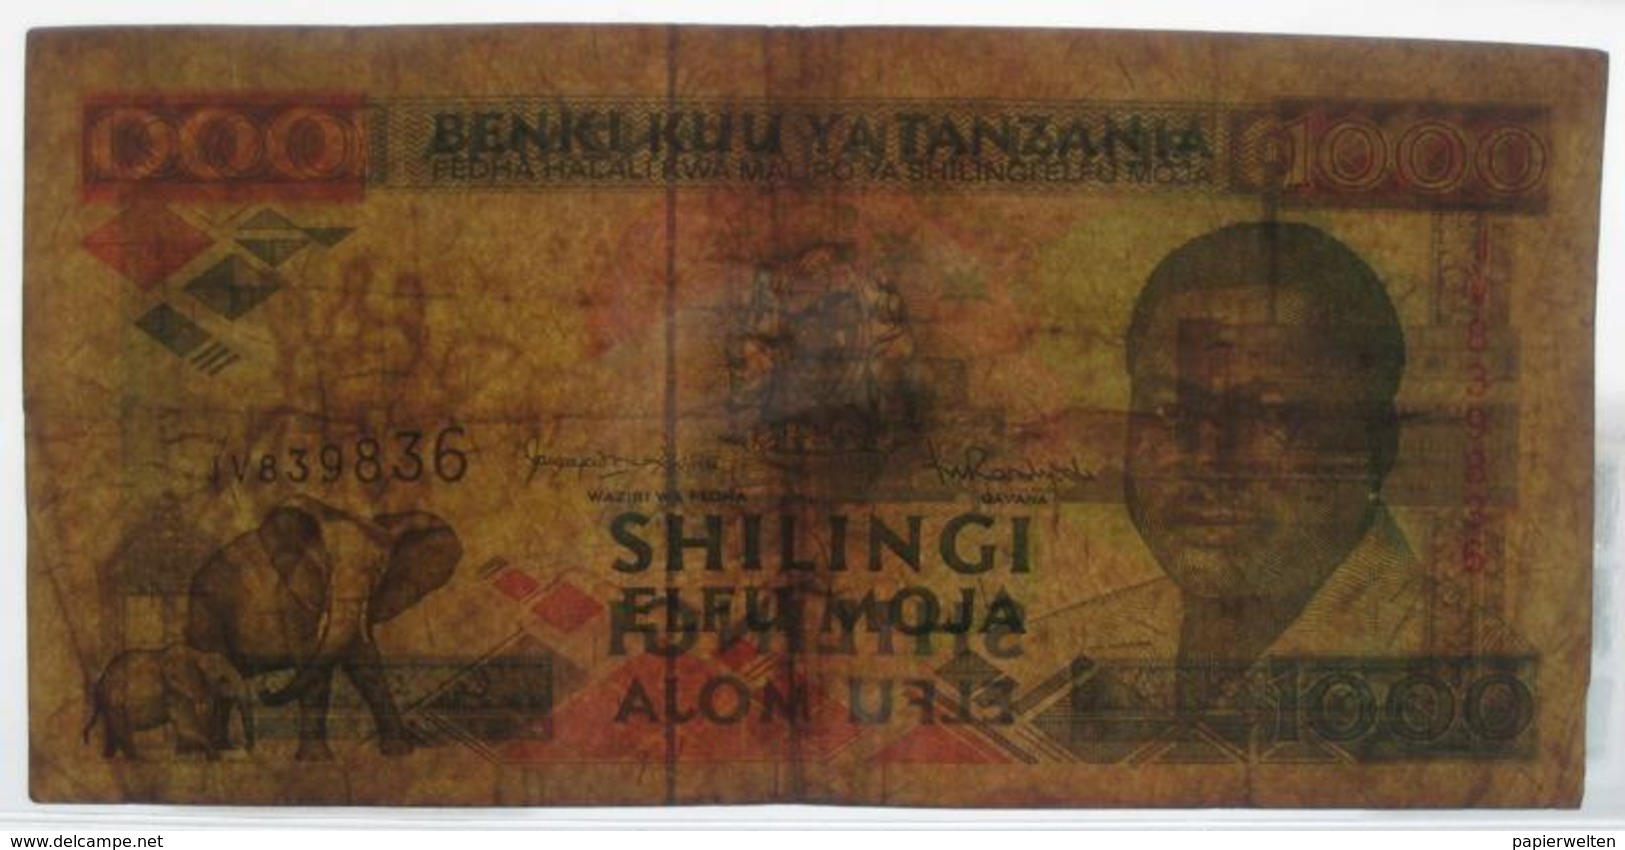 1000 / Elfu Moja Shilingi ND (WPM 27c) - Tansania